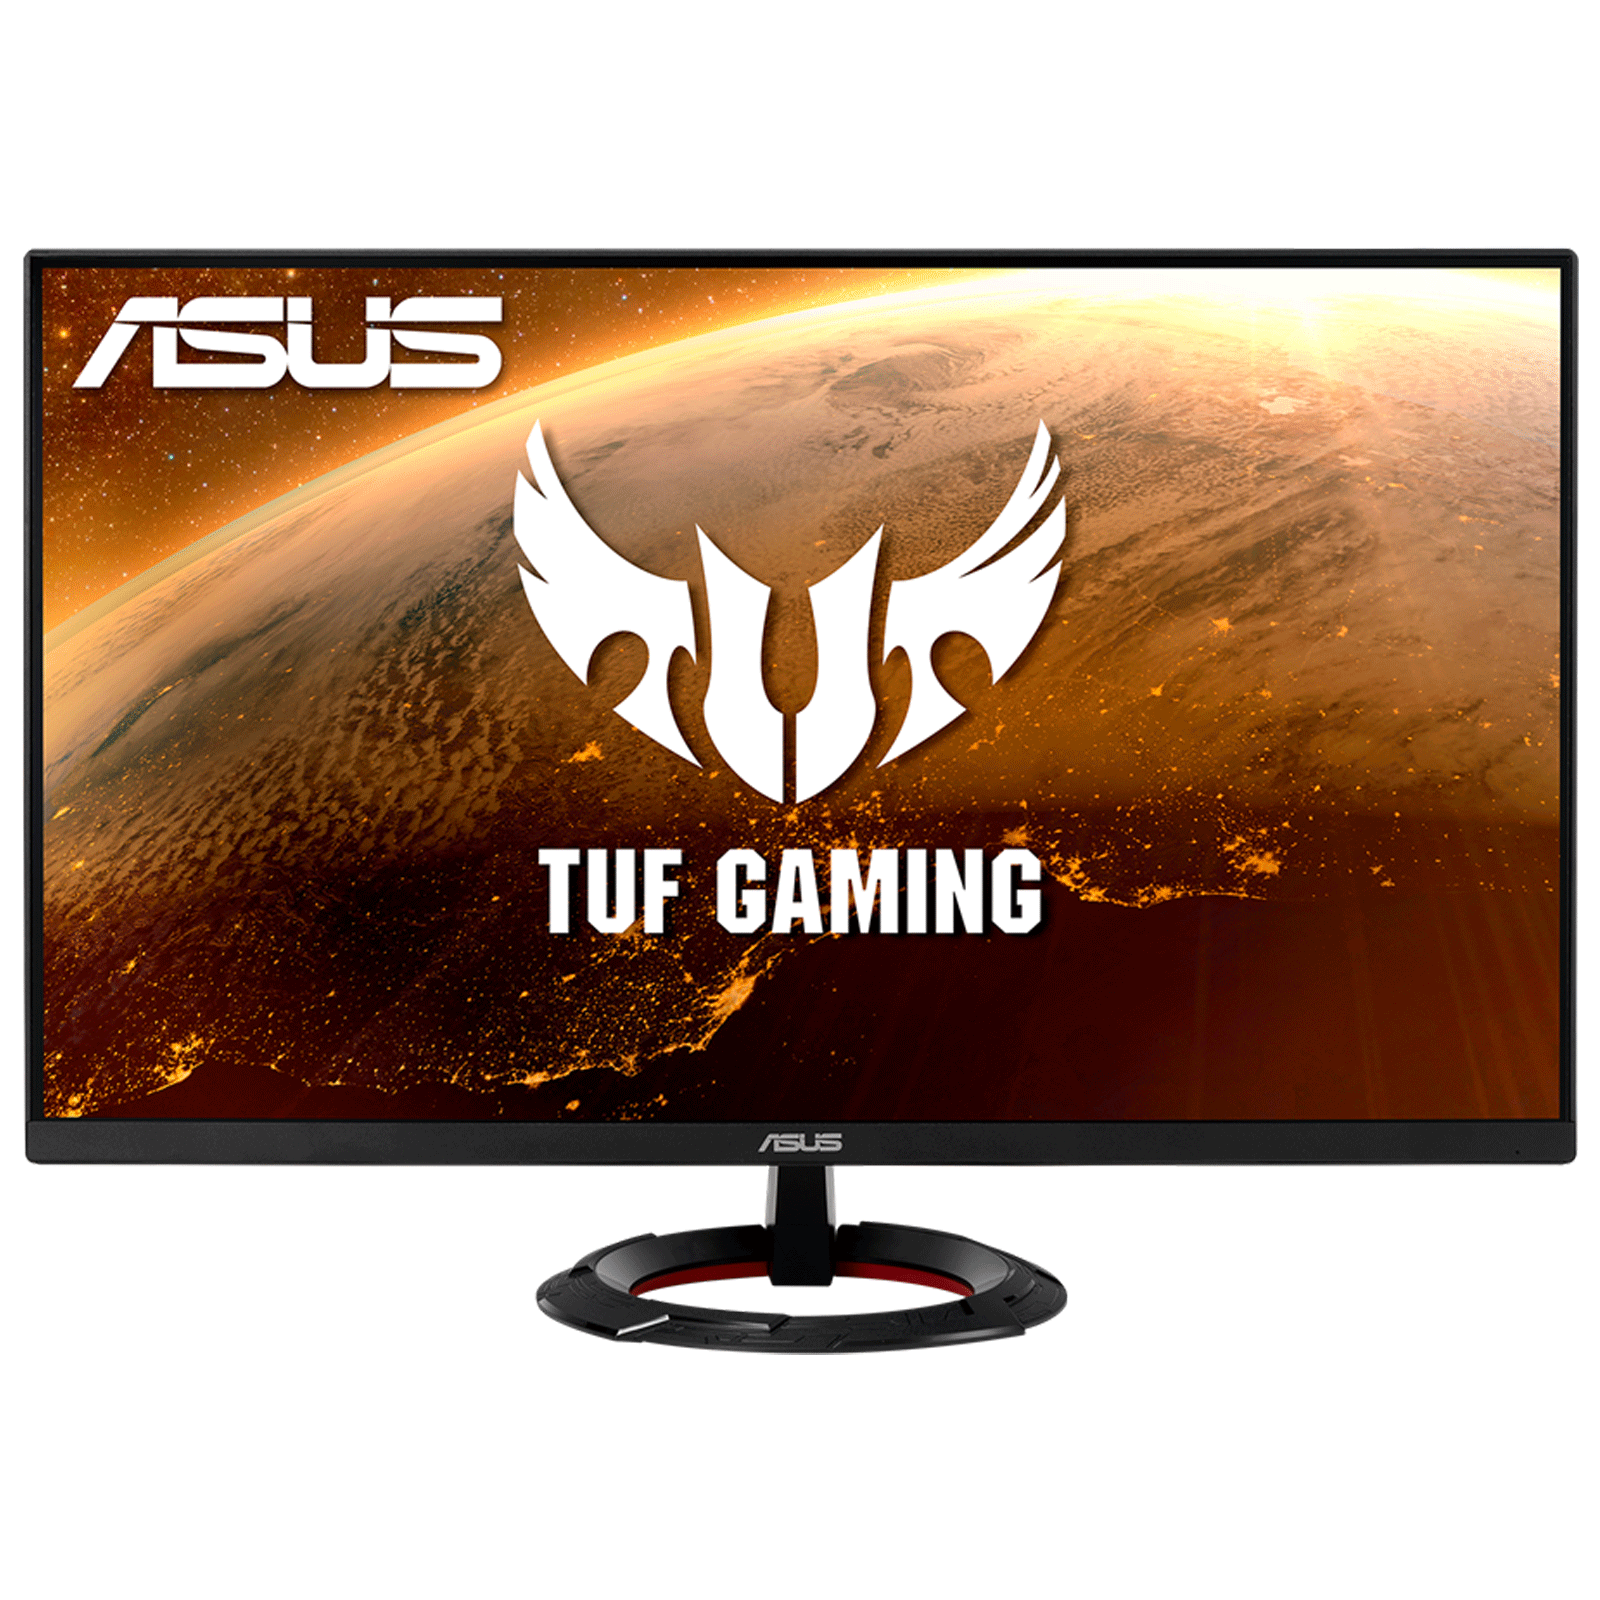 Asus TUF 68.58cm (27 Inches) Full HD Flat Panel Gaming Monitor (FreeSync Premium Technology, HDMI and Display Port, 144Hz, VG279Q1R, Black)_1